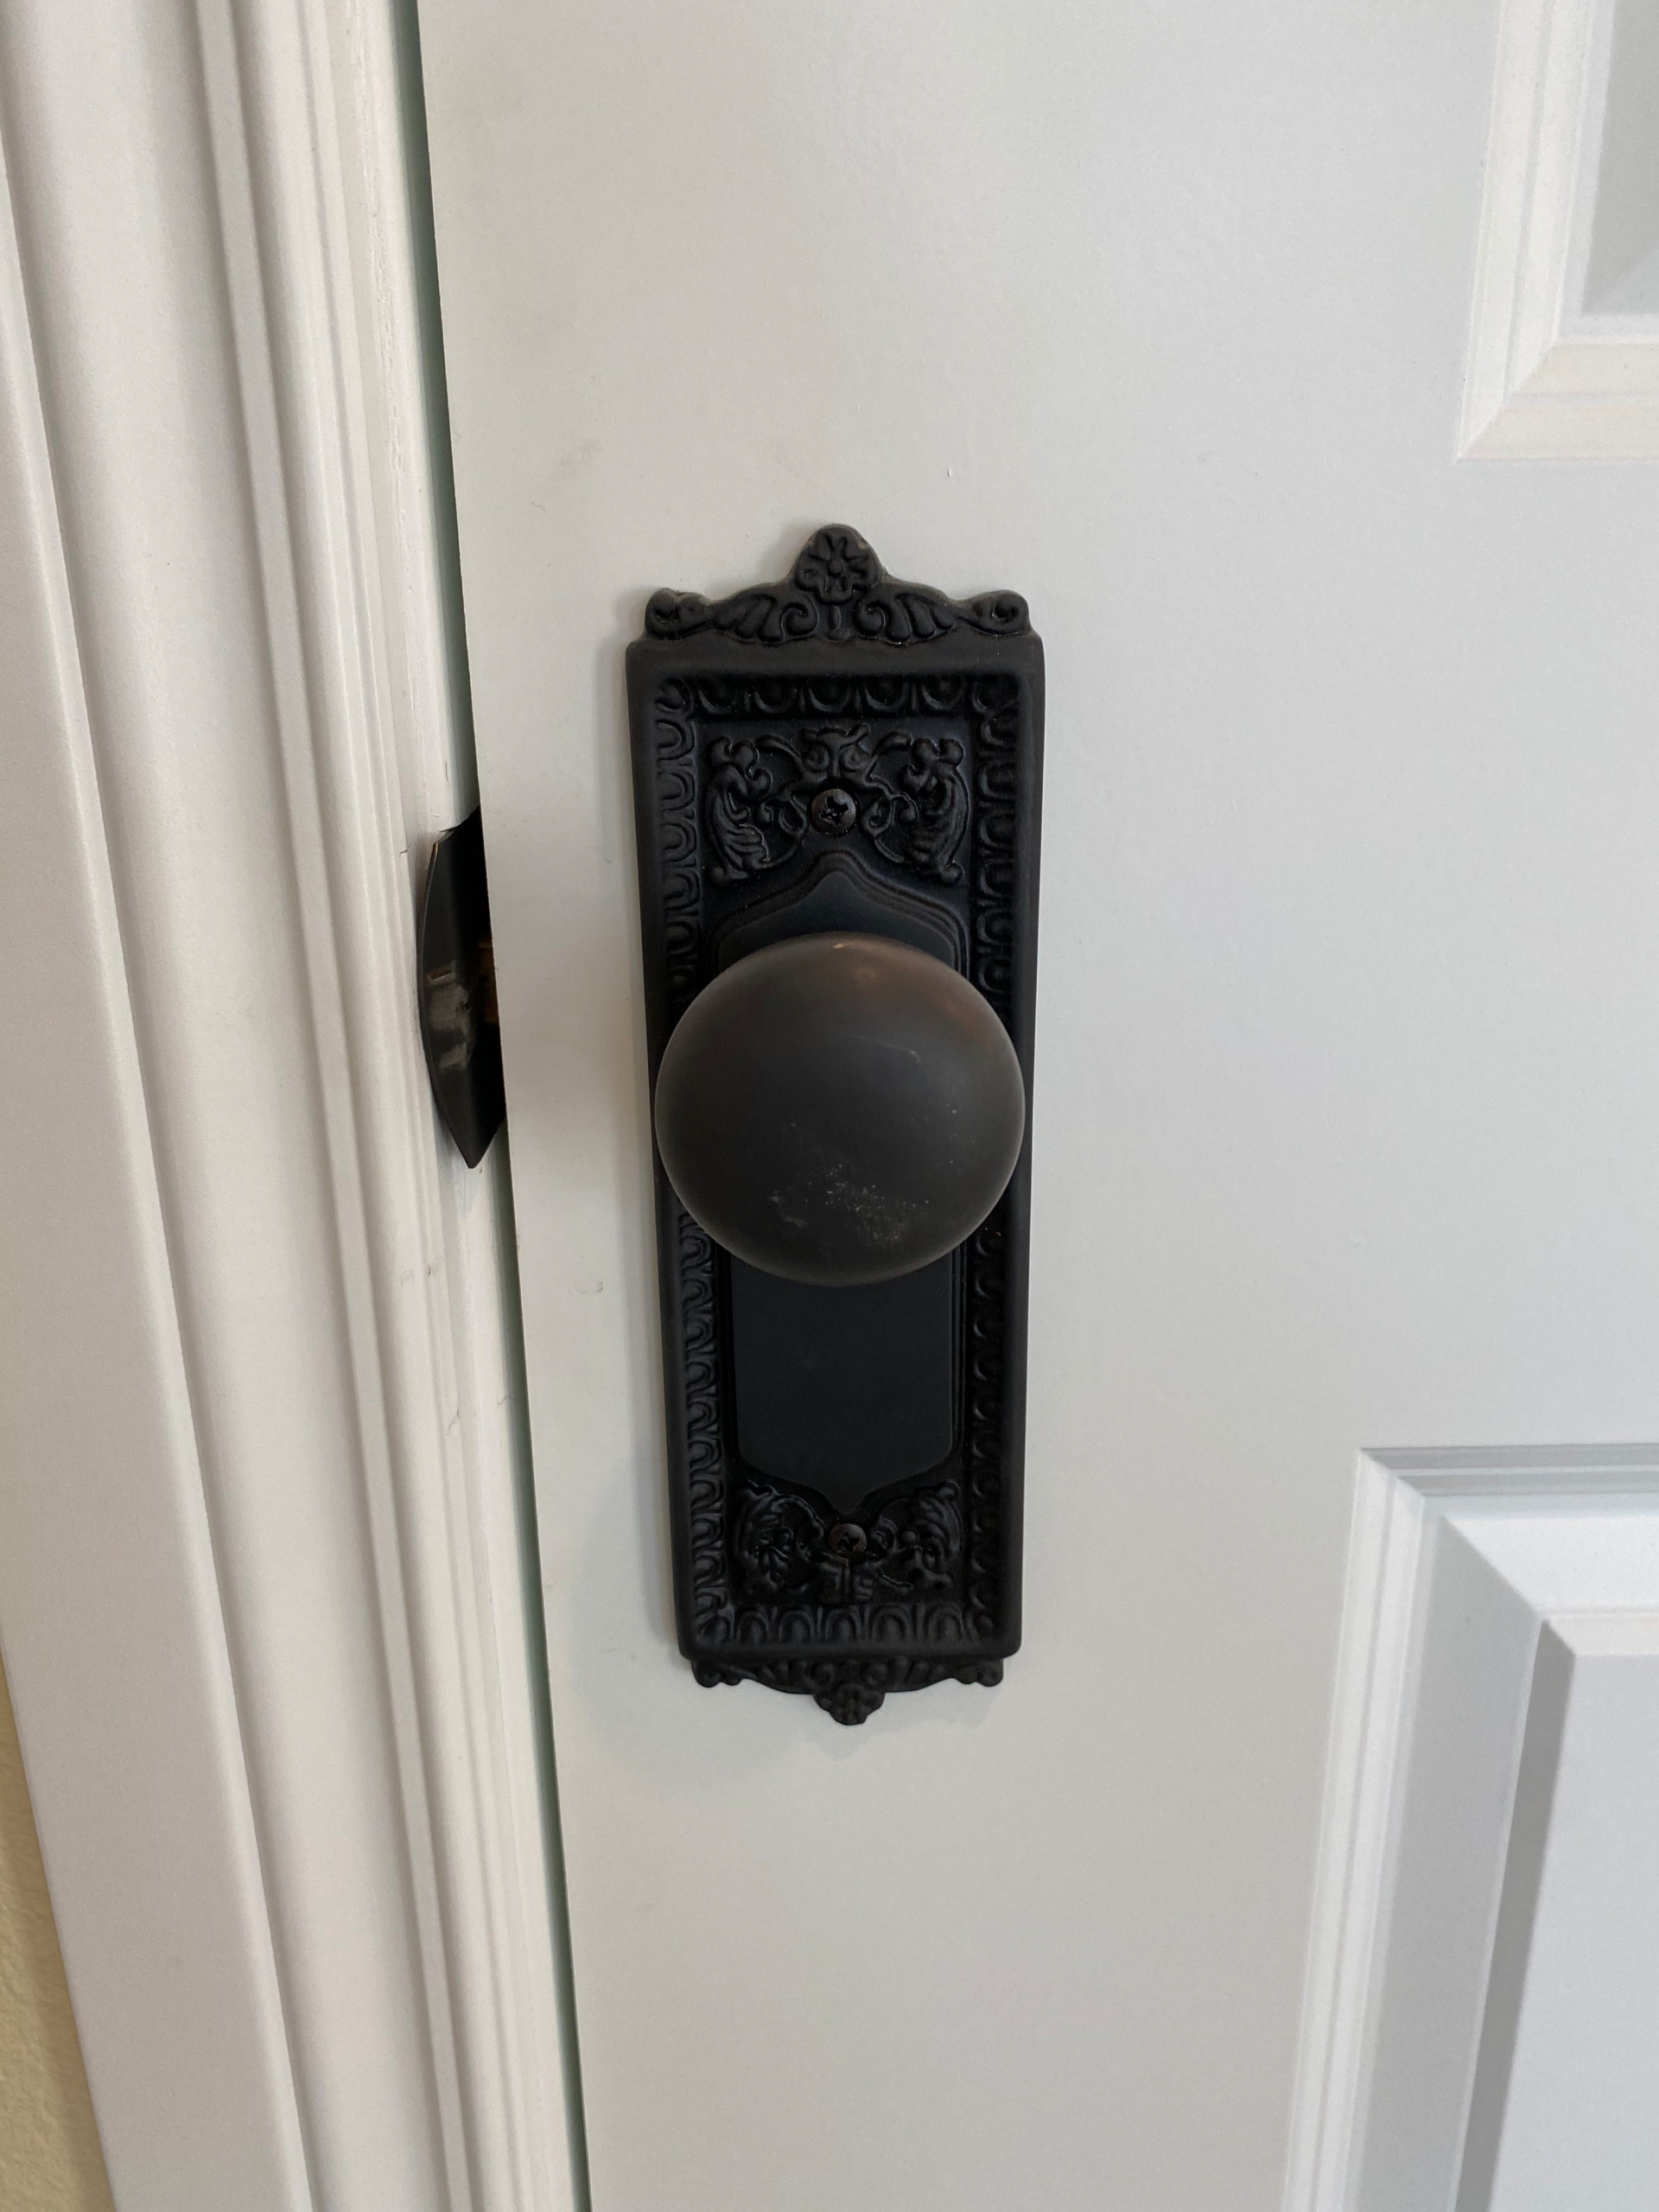 Vintage style door hardware